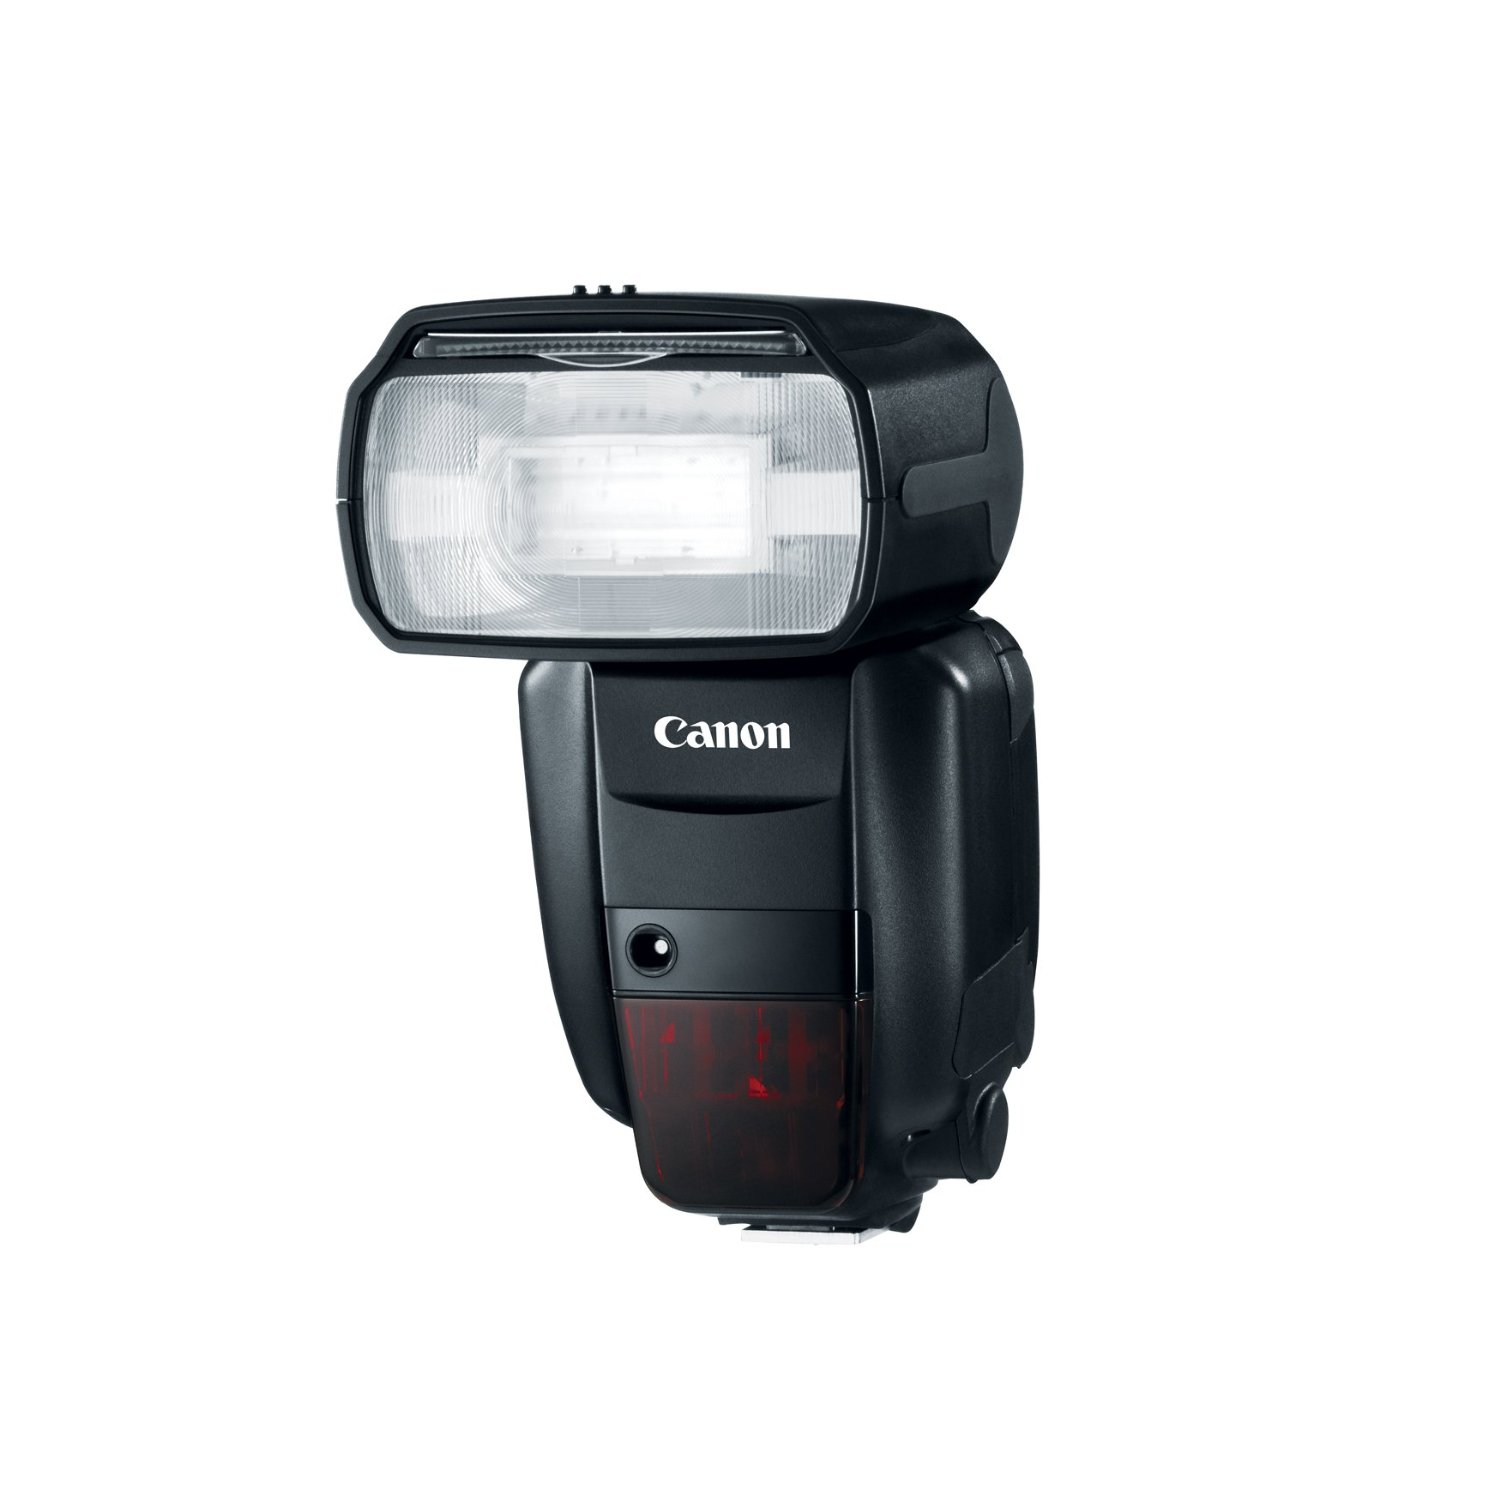 Canon Speedlite 600EX-RT Flash $449.00  +free shipping